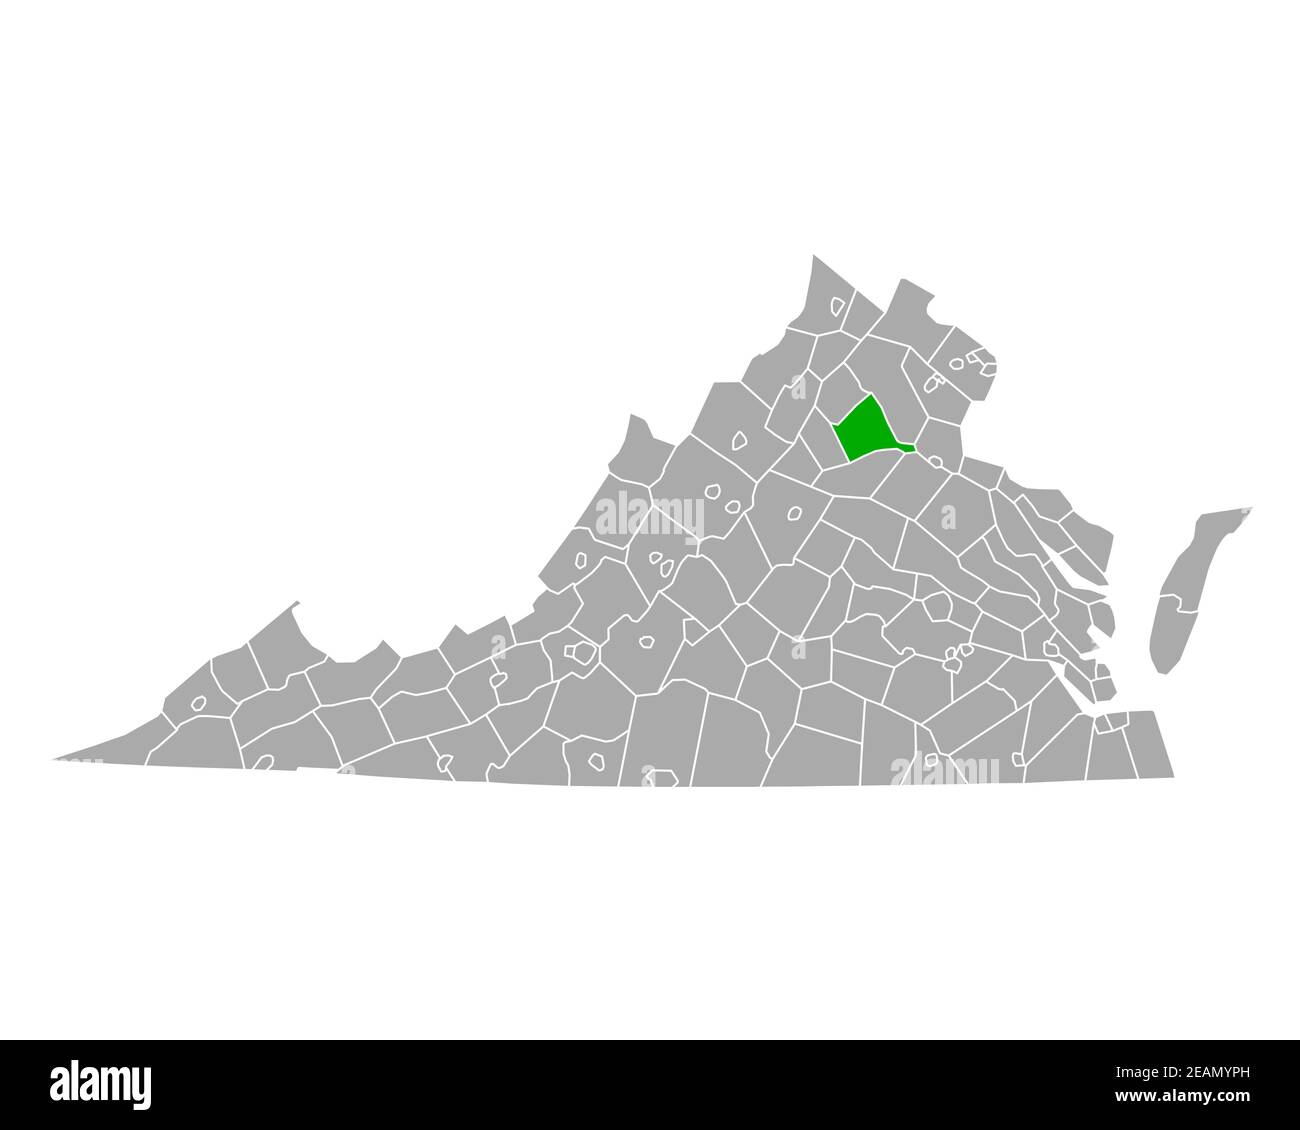 Map Of Culpeper In Virginia 2EAMYPH 